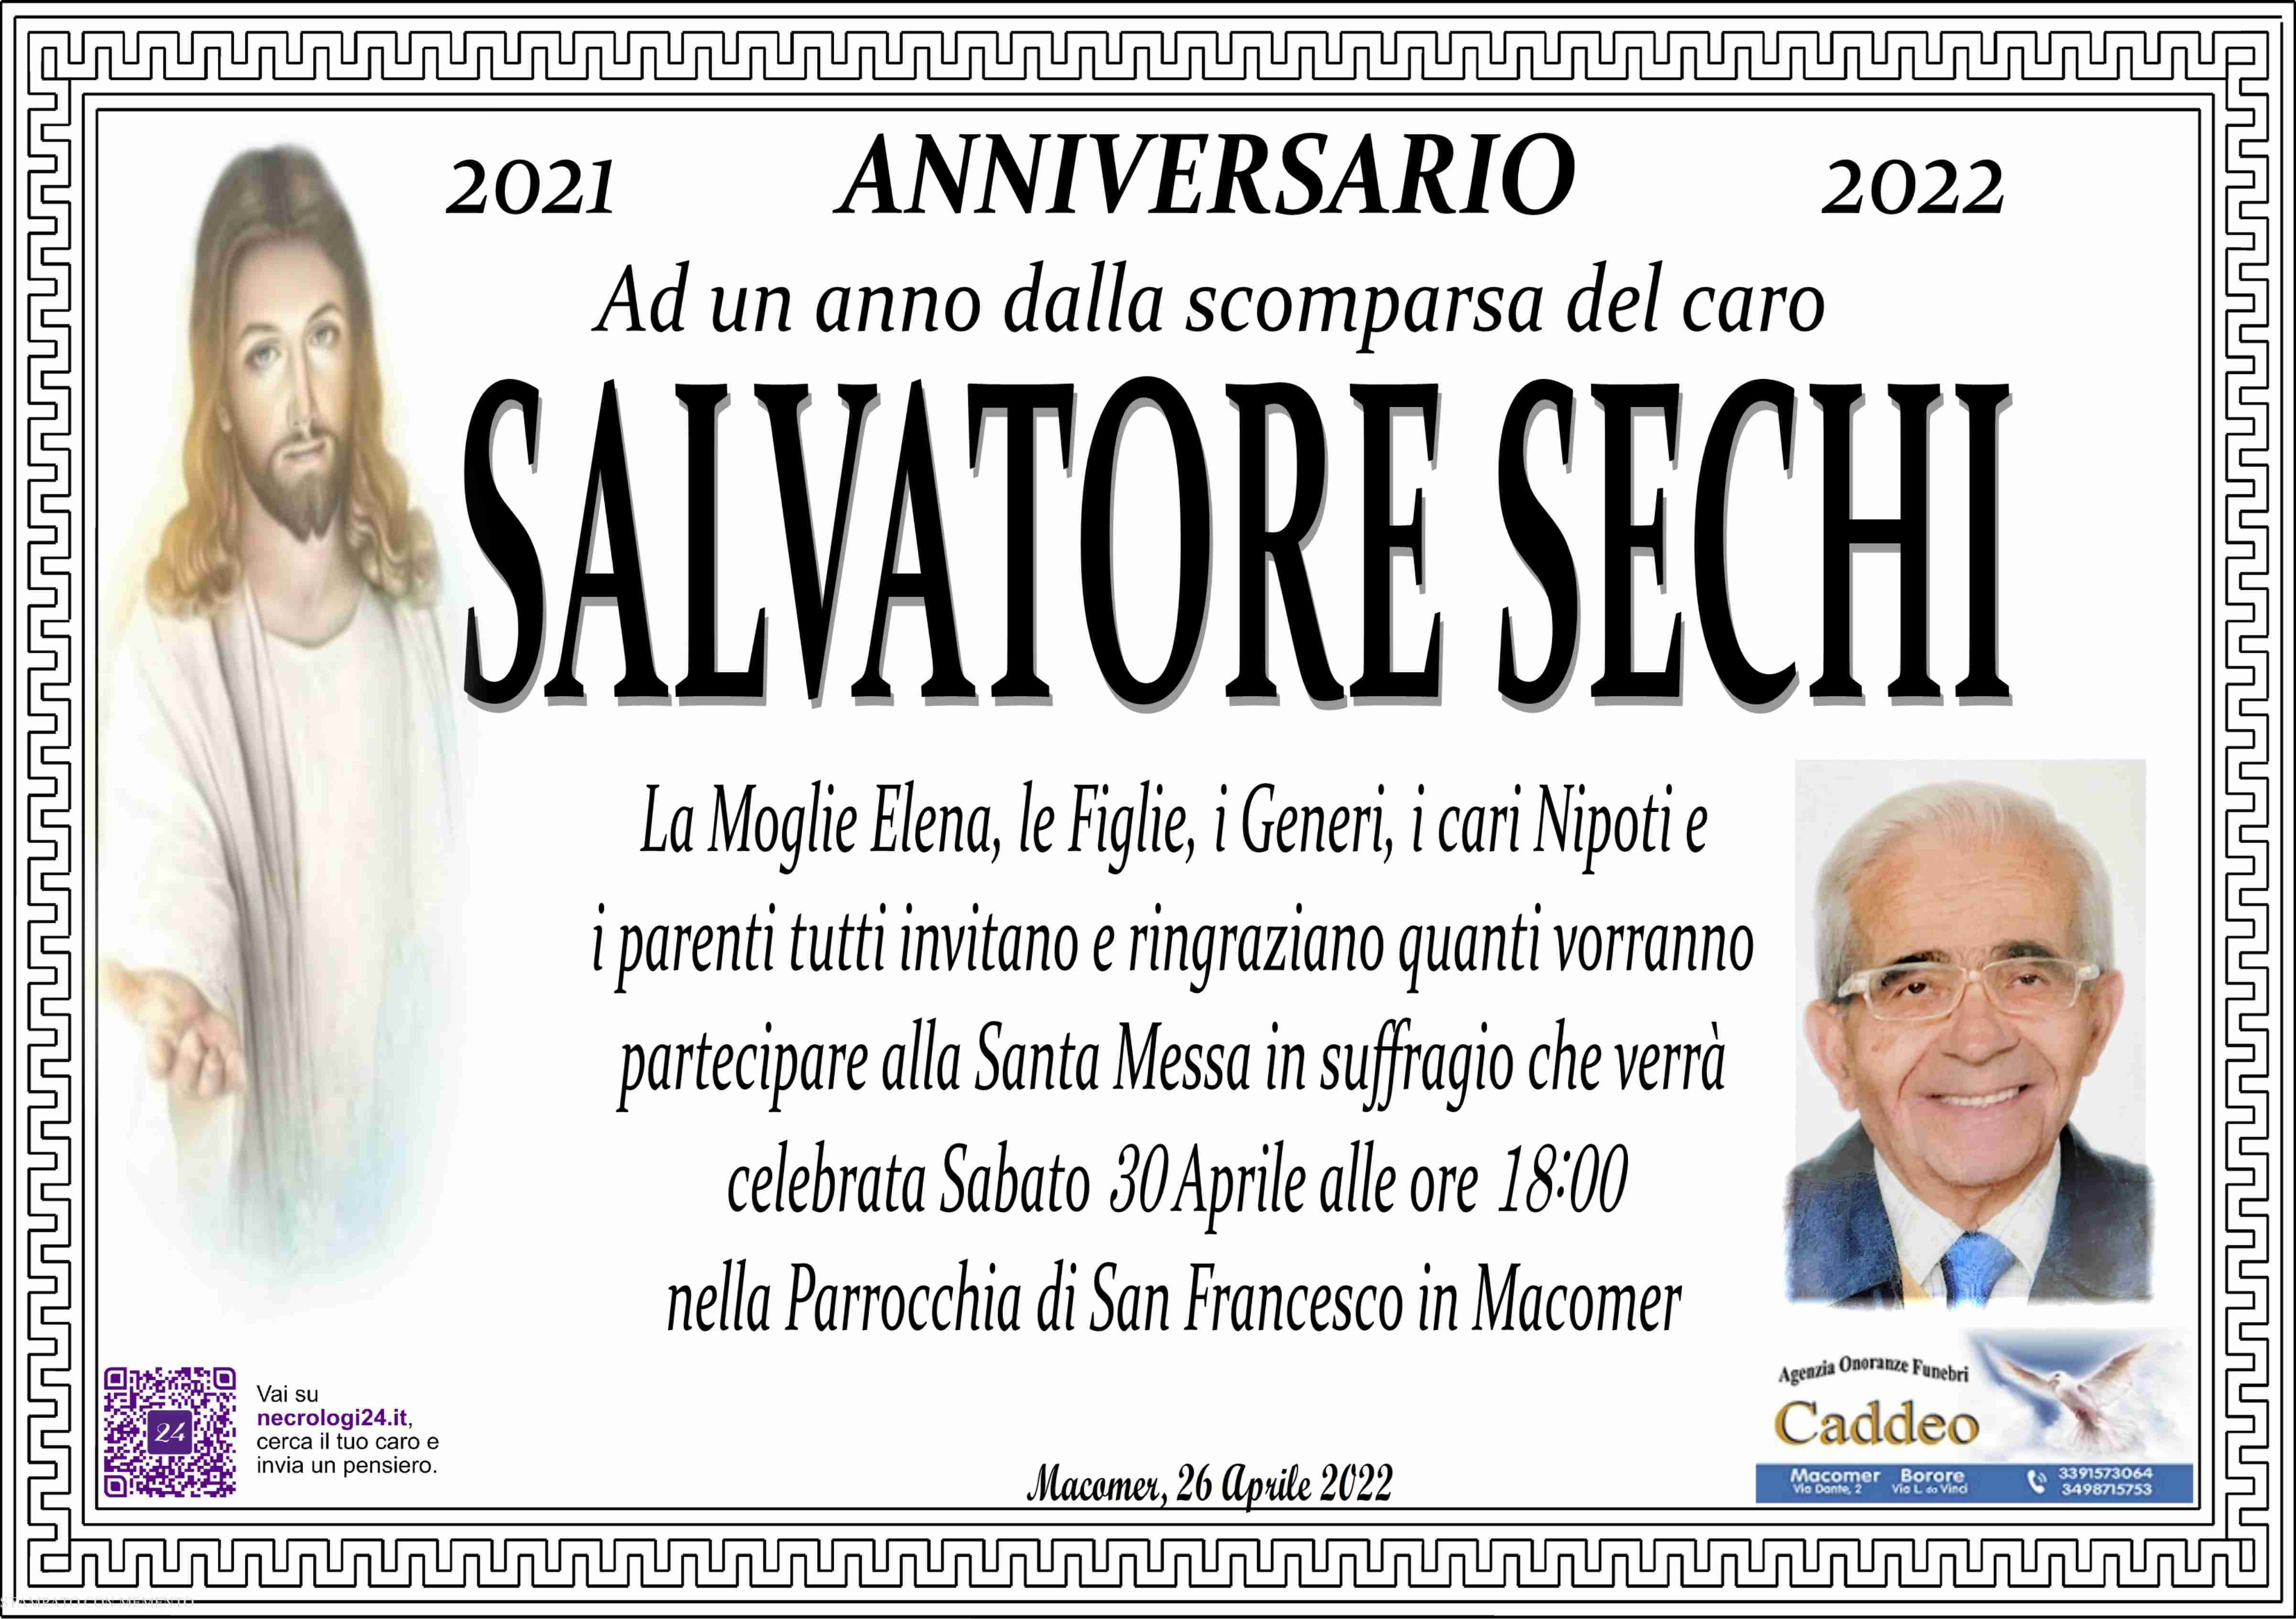 Salvatore Sechi